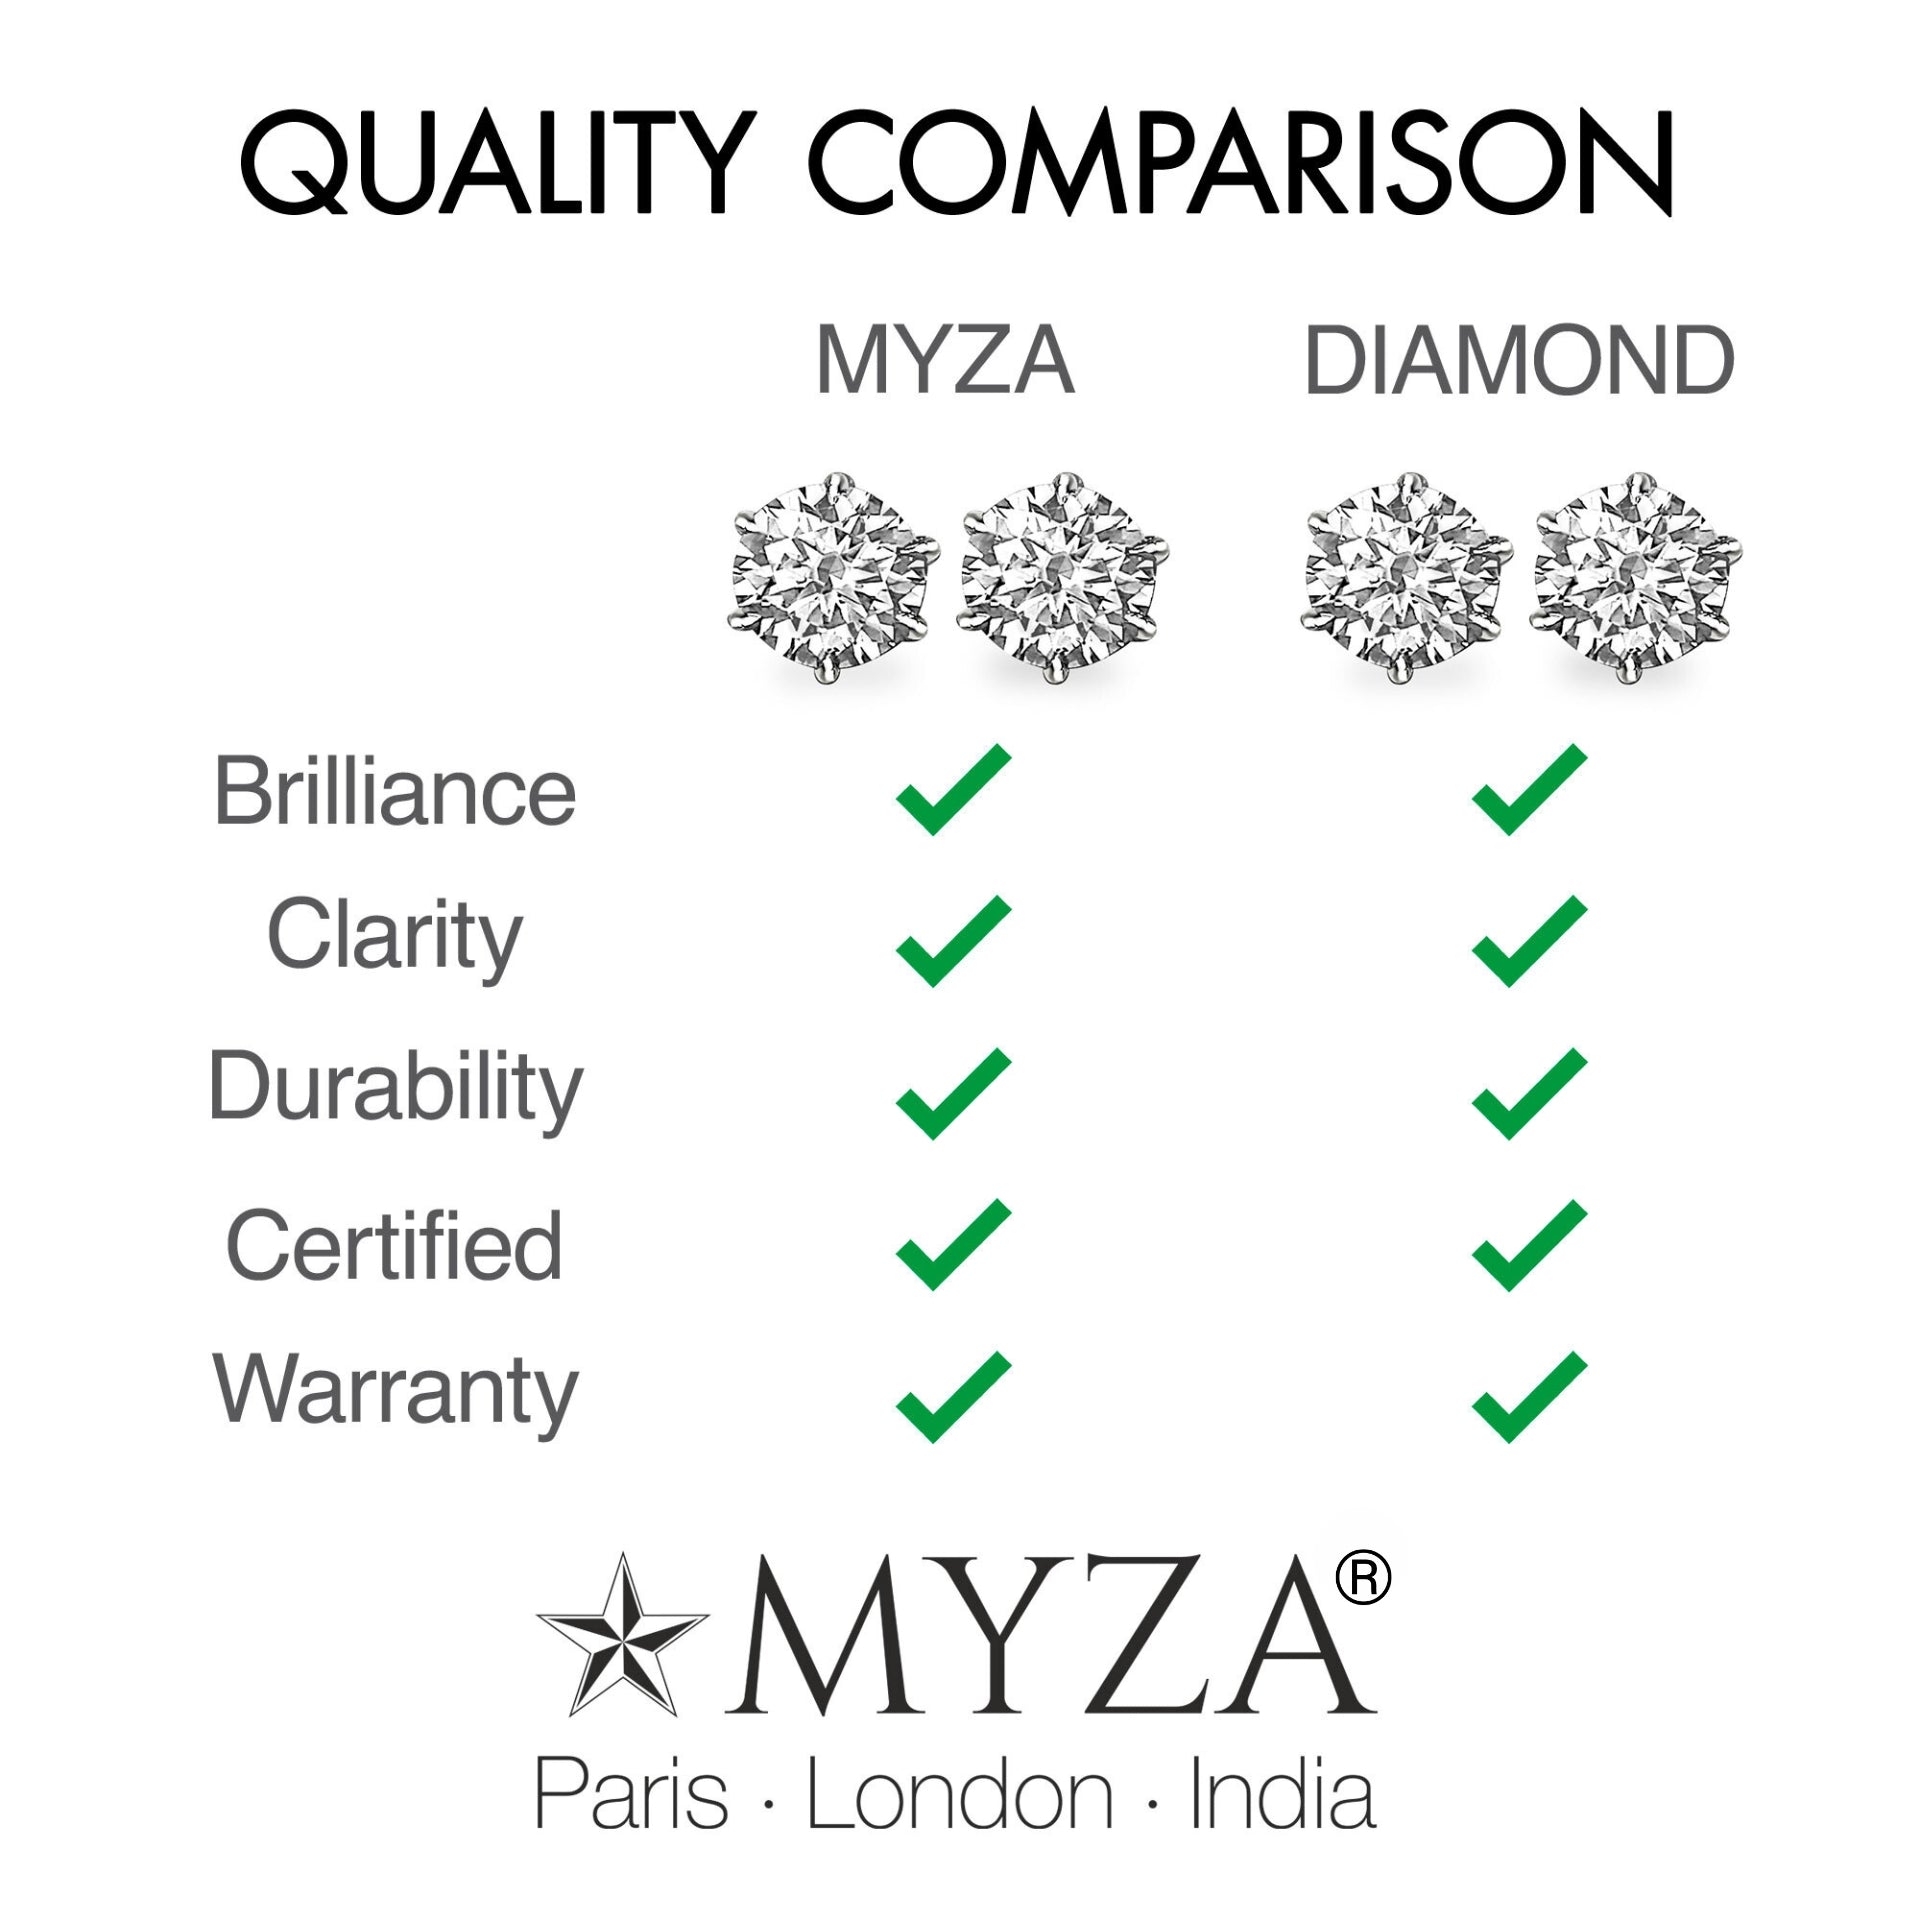 2-Carat MYZA Hallmark Gold Earrings - MYZA 